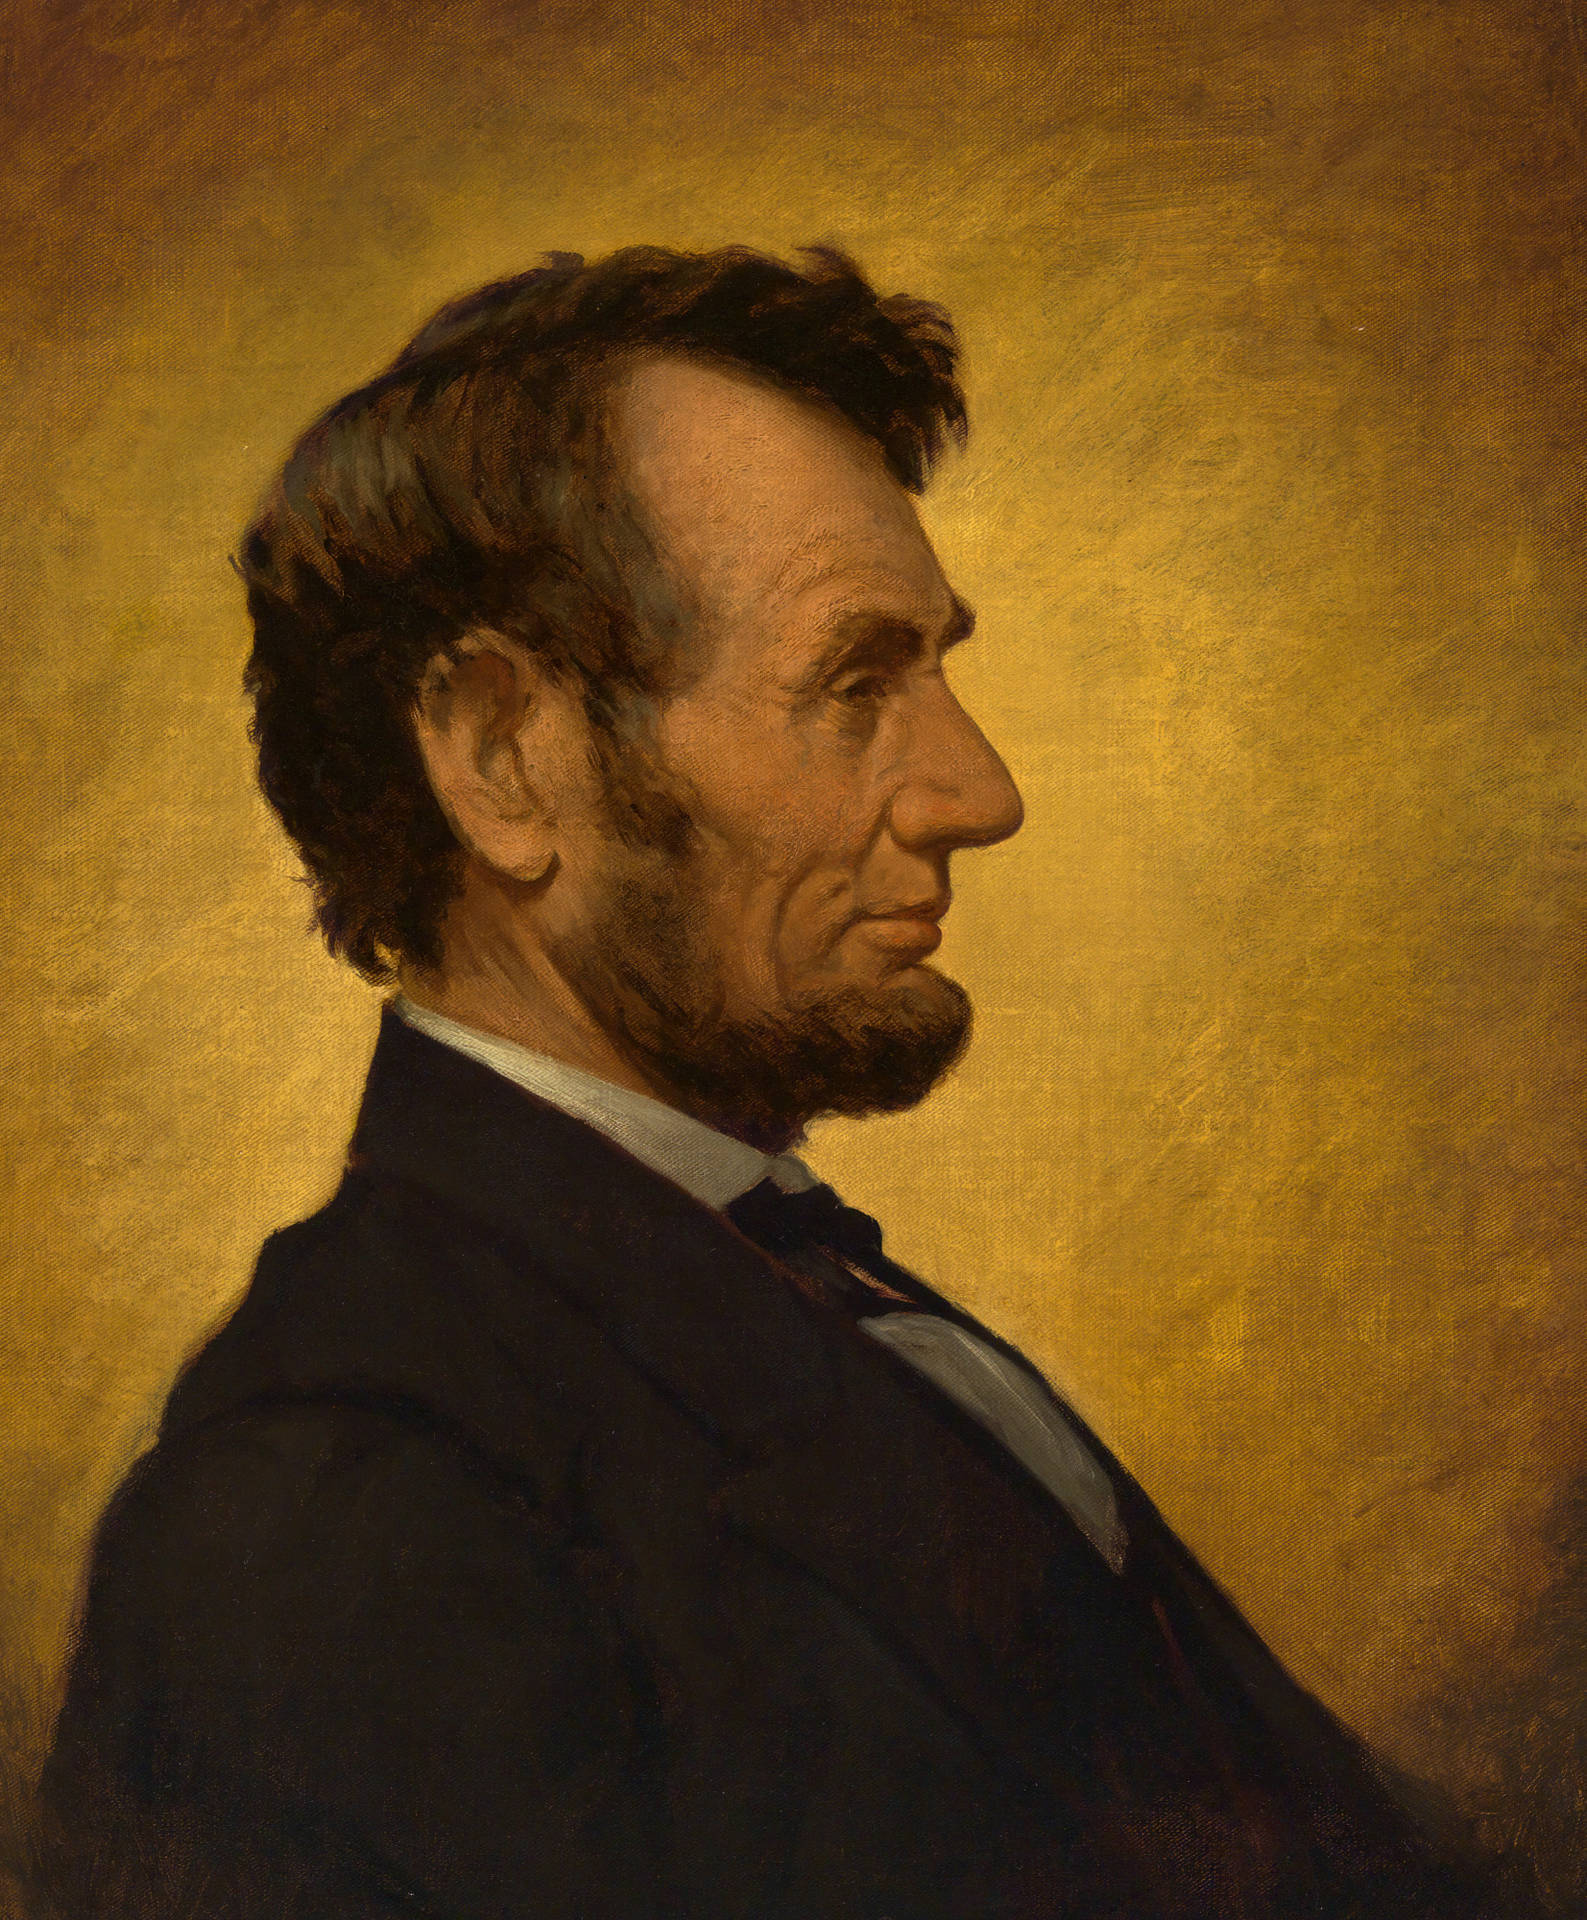 Abraham Lincoln Side-view Portrait Wallpaper